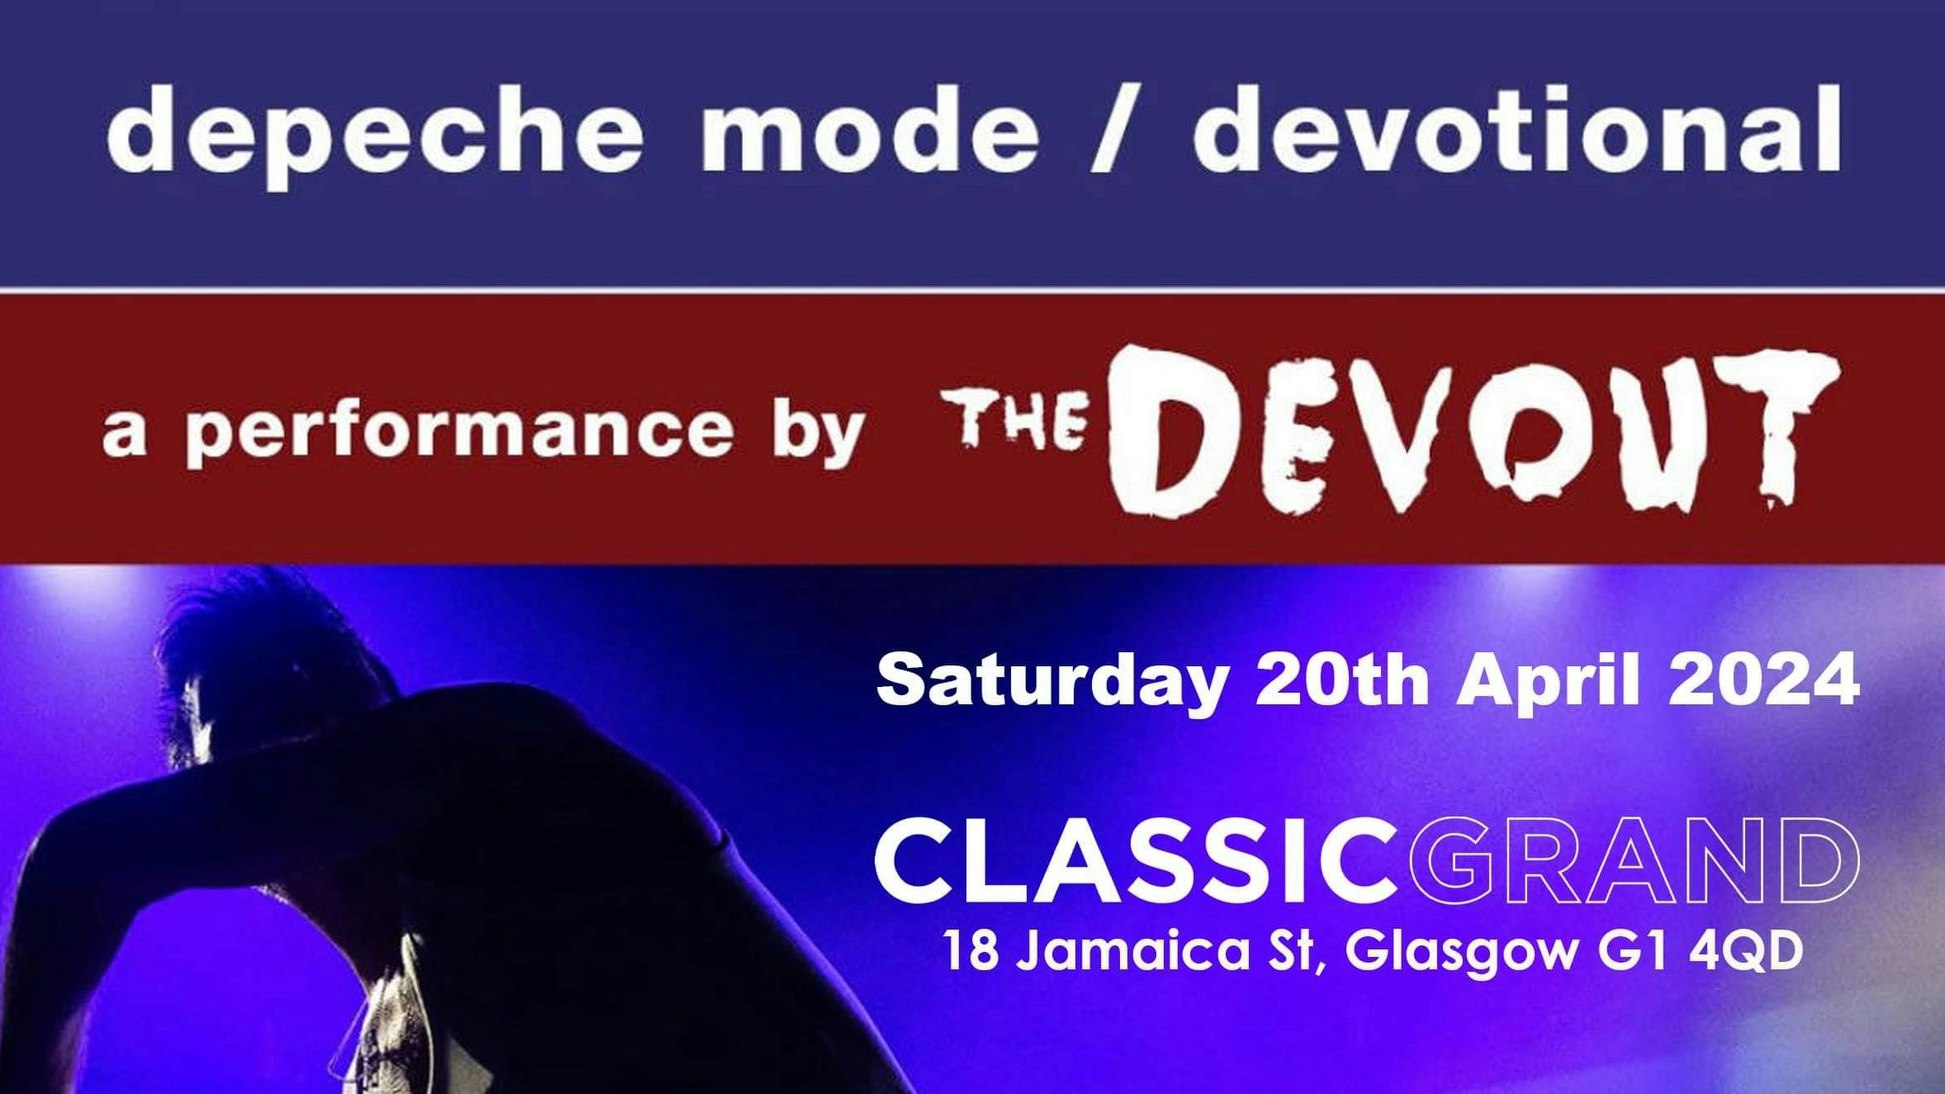 The Devout – Depeche Mode Tribute Act